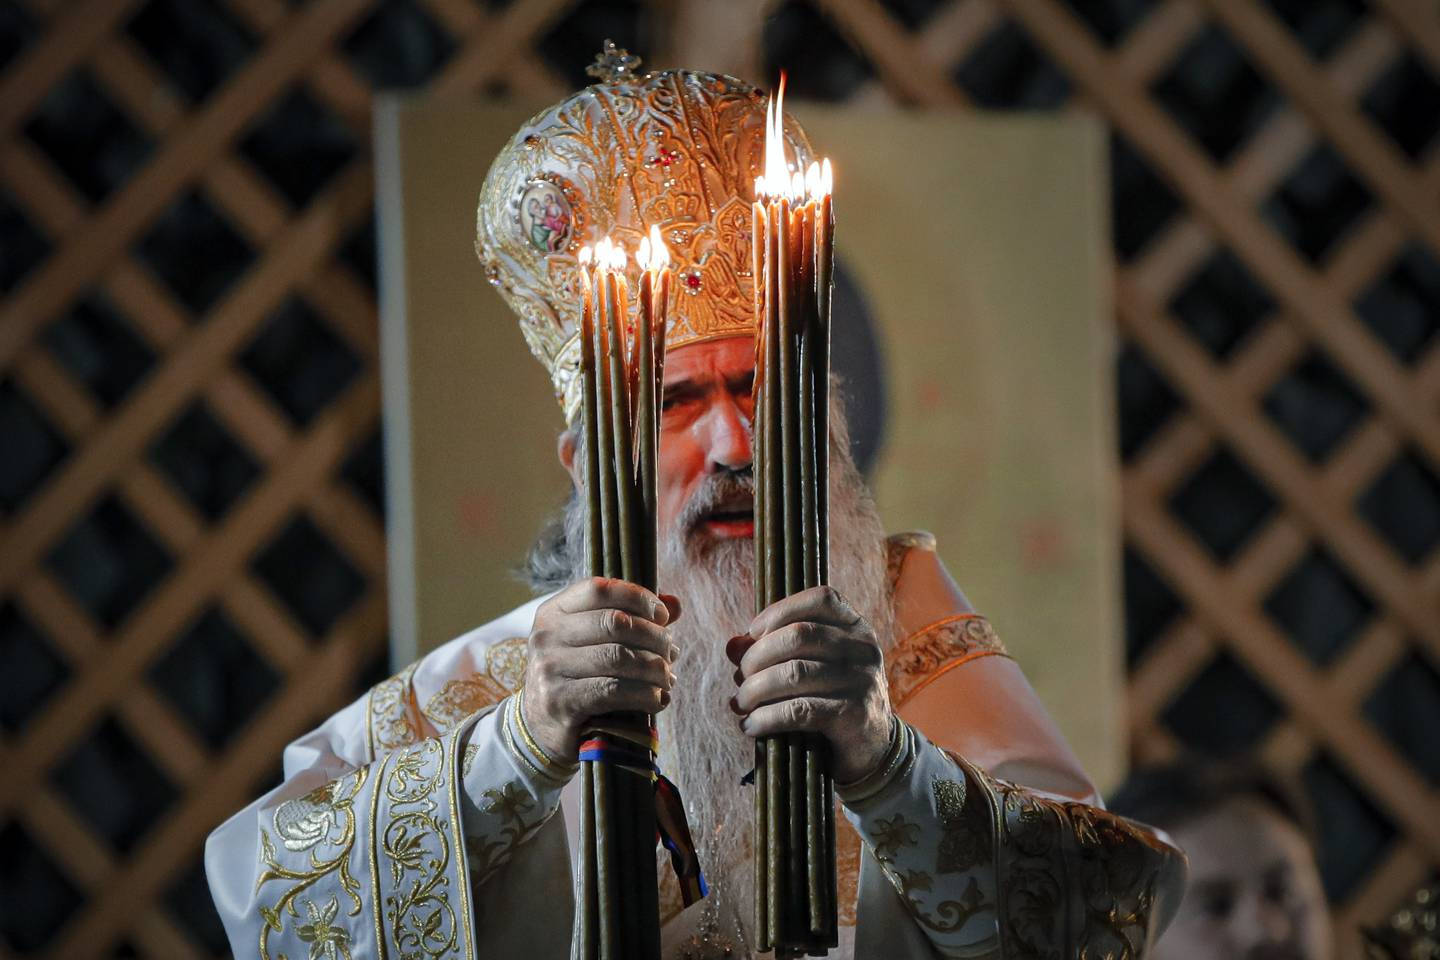 VIL IKKE ENDRE: Erkebiskop Teodise har sagt at Den rumensk.ortodokse kirke ikke vil endre på dåpsritualet, ifølge The Guardian.